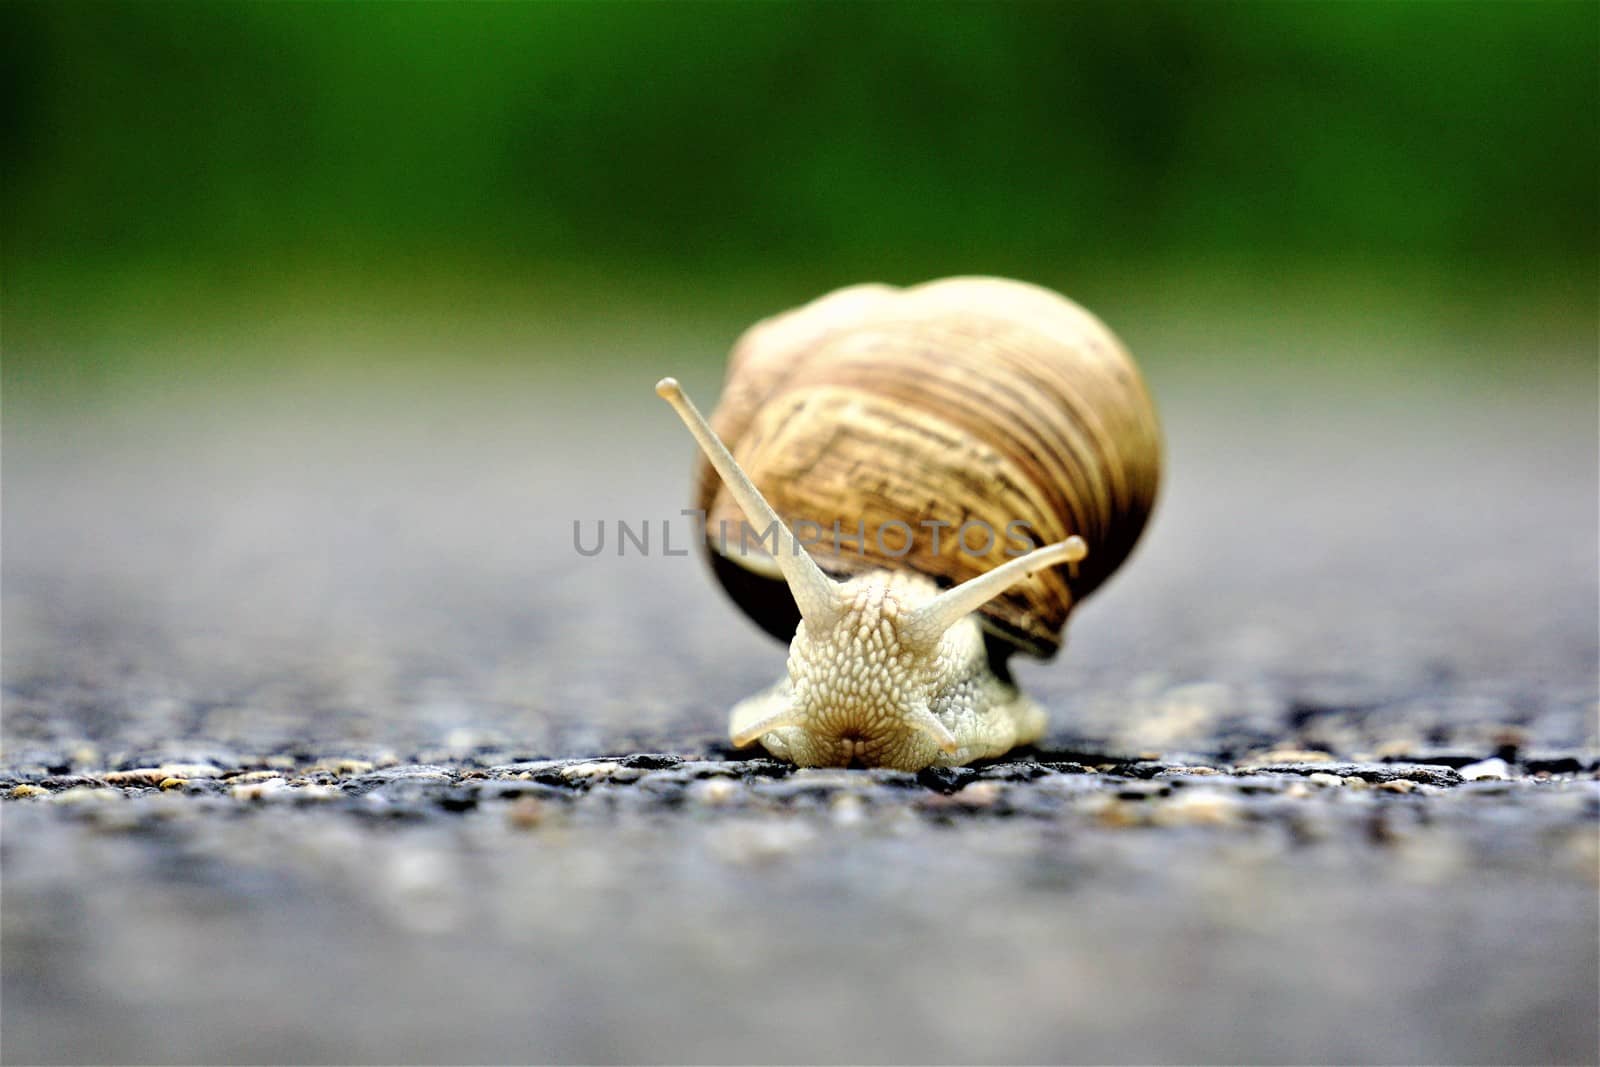 A front close up of an europaean vineyard snail